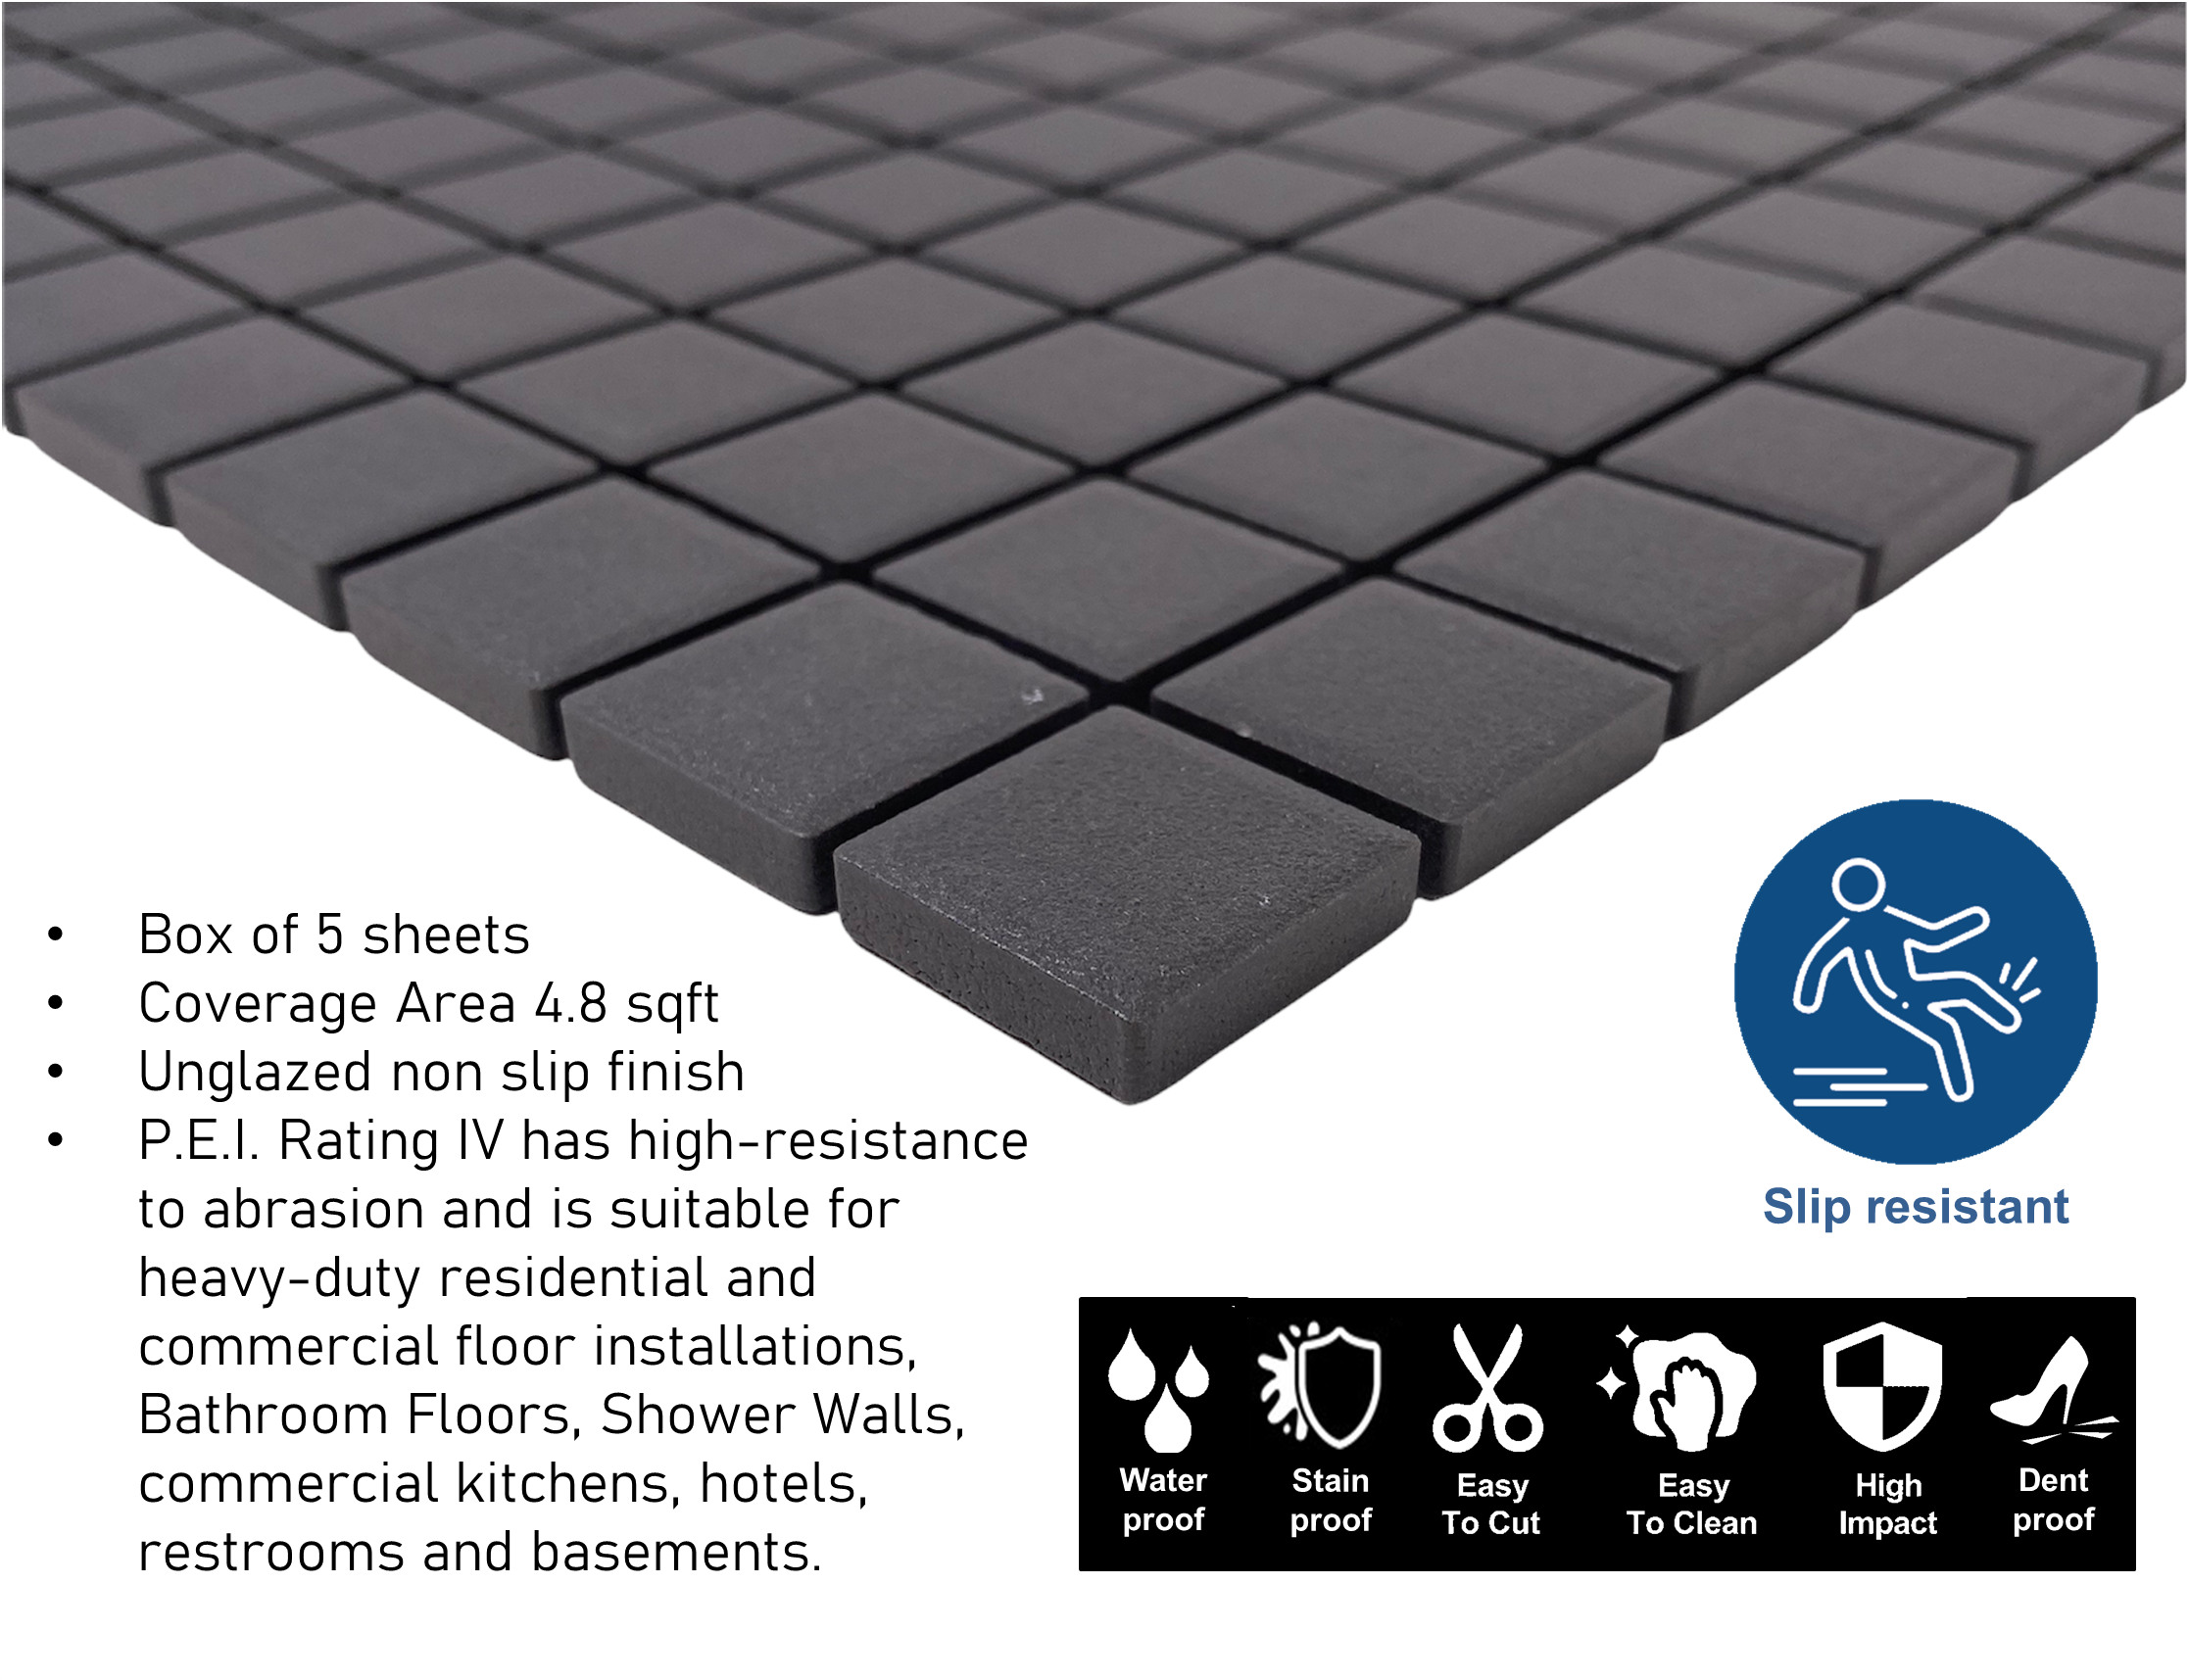 TDPW-UGB1X1-403 Black Porcelain 7/8 Inch Square Unglazed Finish Mosaic Floor Wall Tile for Bathroom Shower, Kitchen Backsplash and Pool